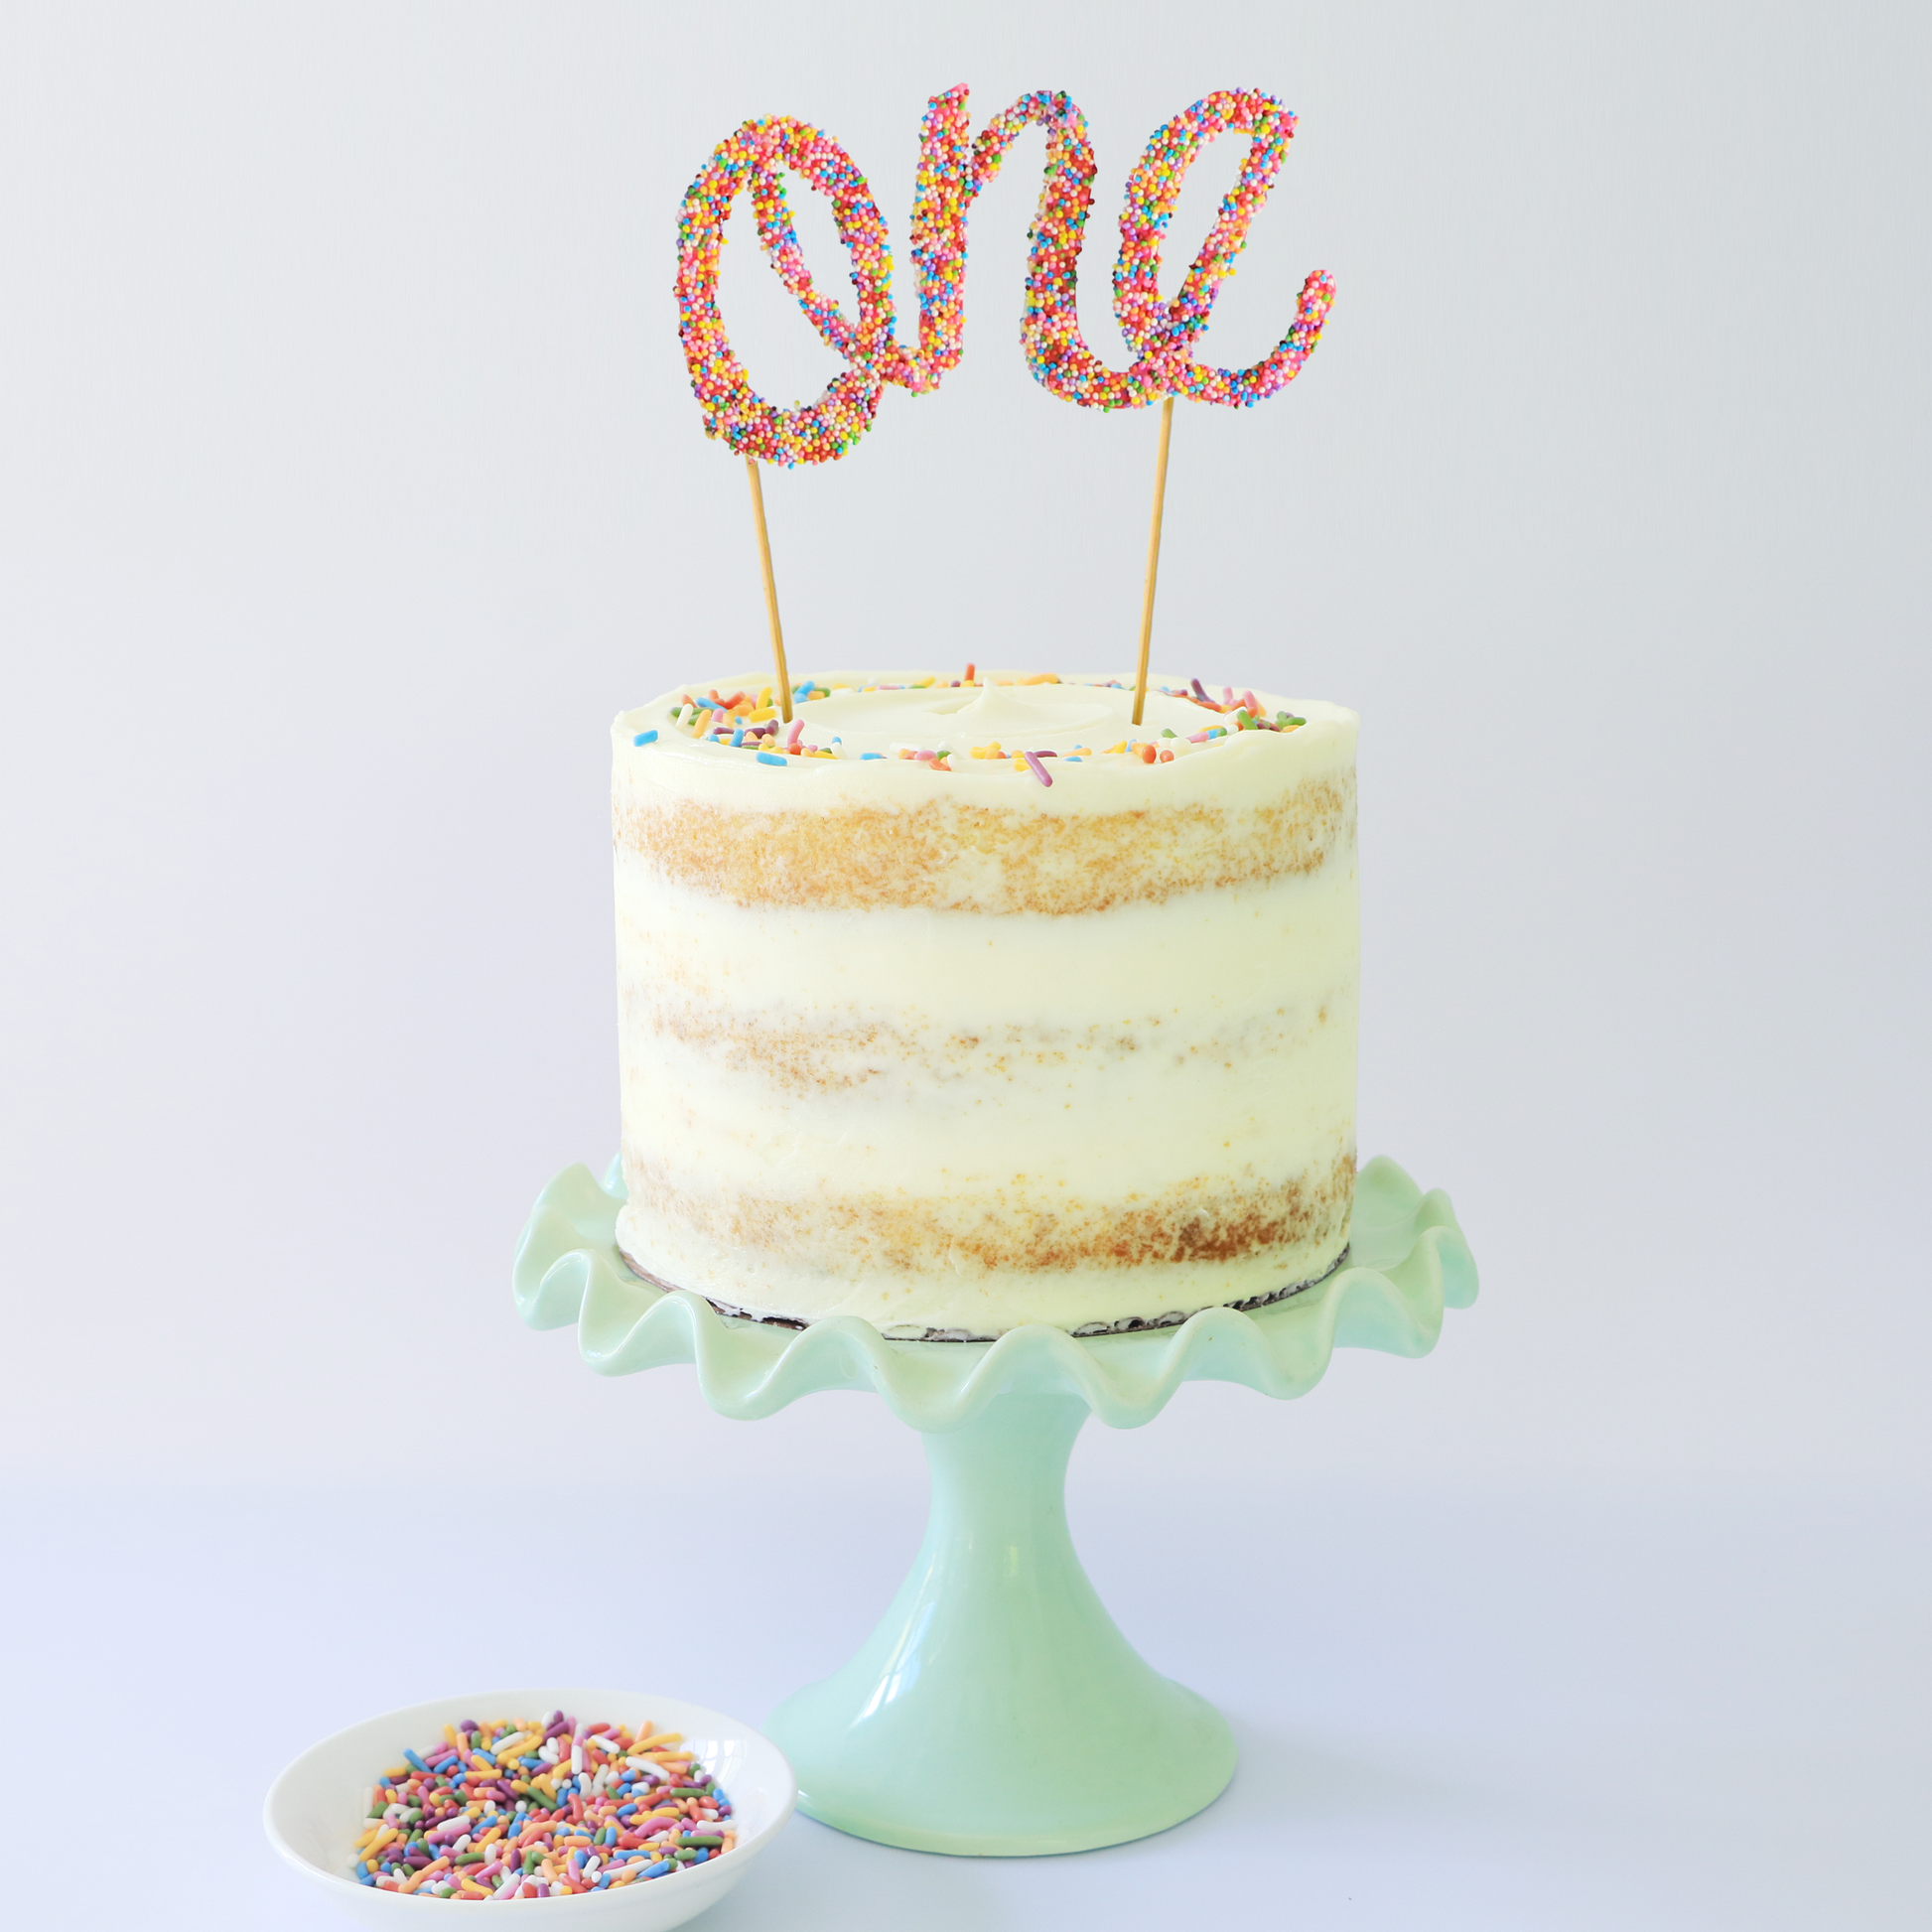 Smash cake topper, one cake topper, sprinkles, for birthday cakes